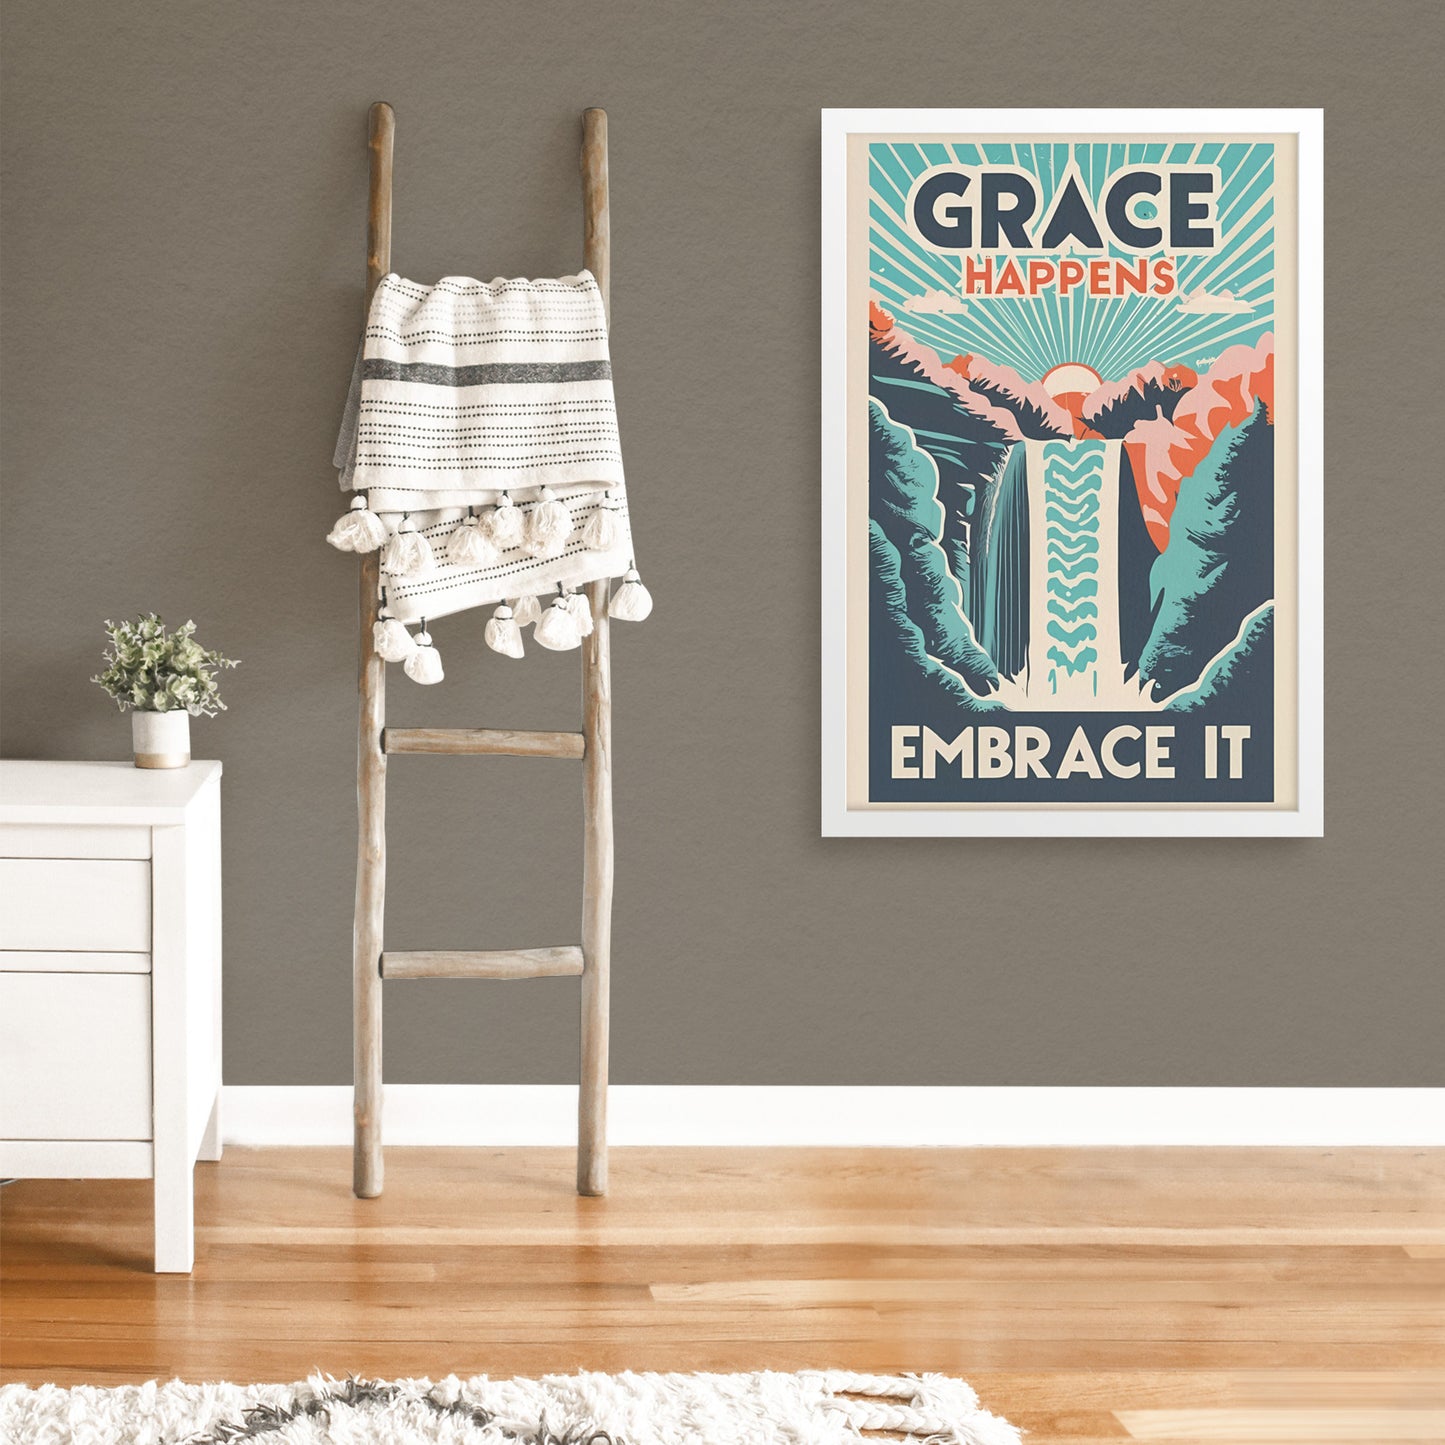 Grace Happens, Embrace It Retro Style Sunrise Waterfall Framed Poster